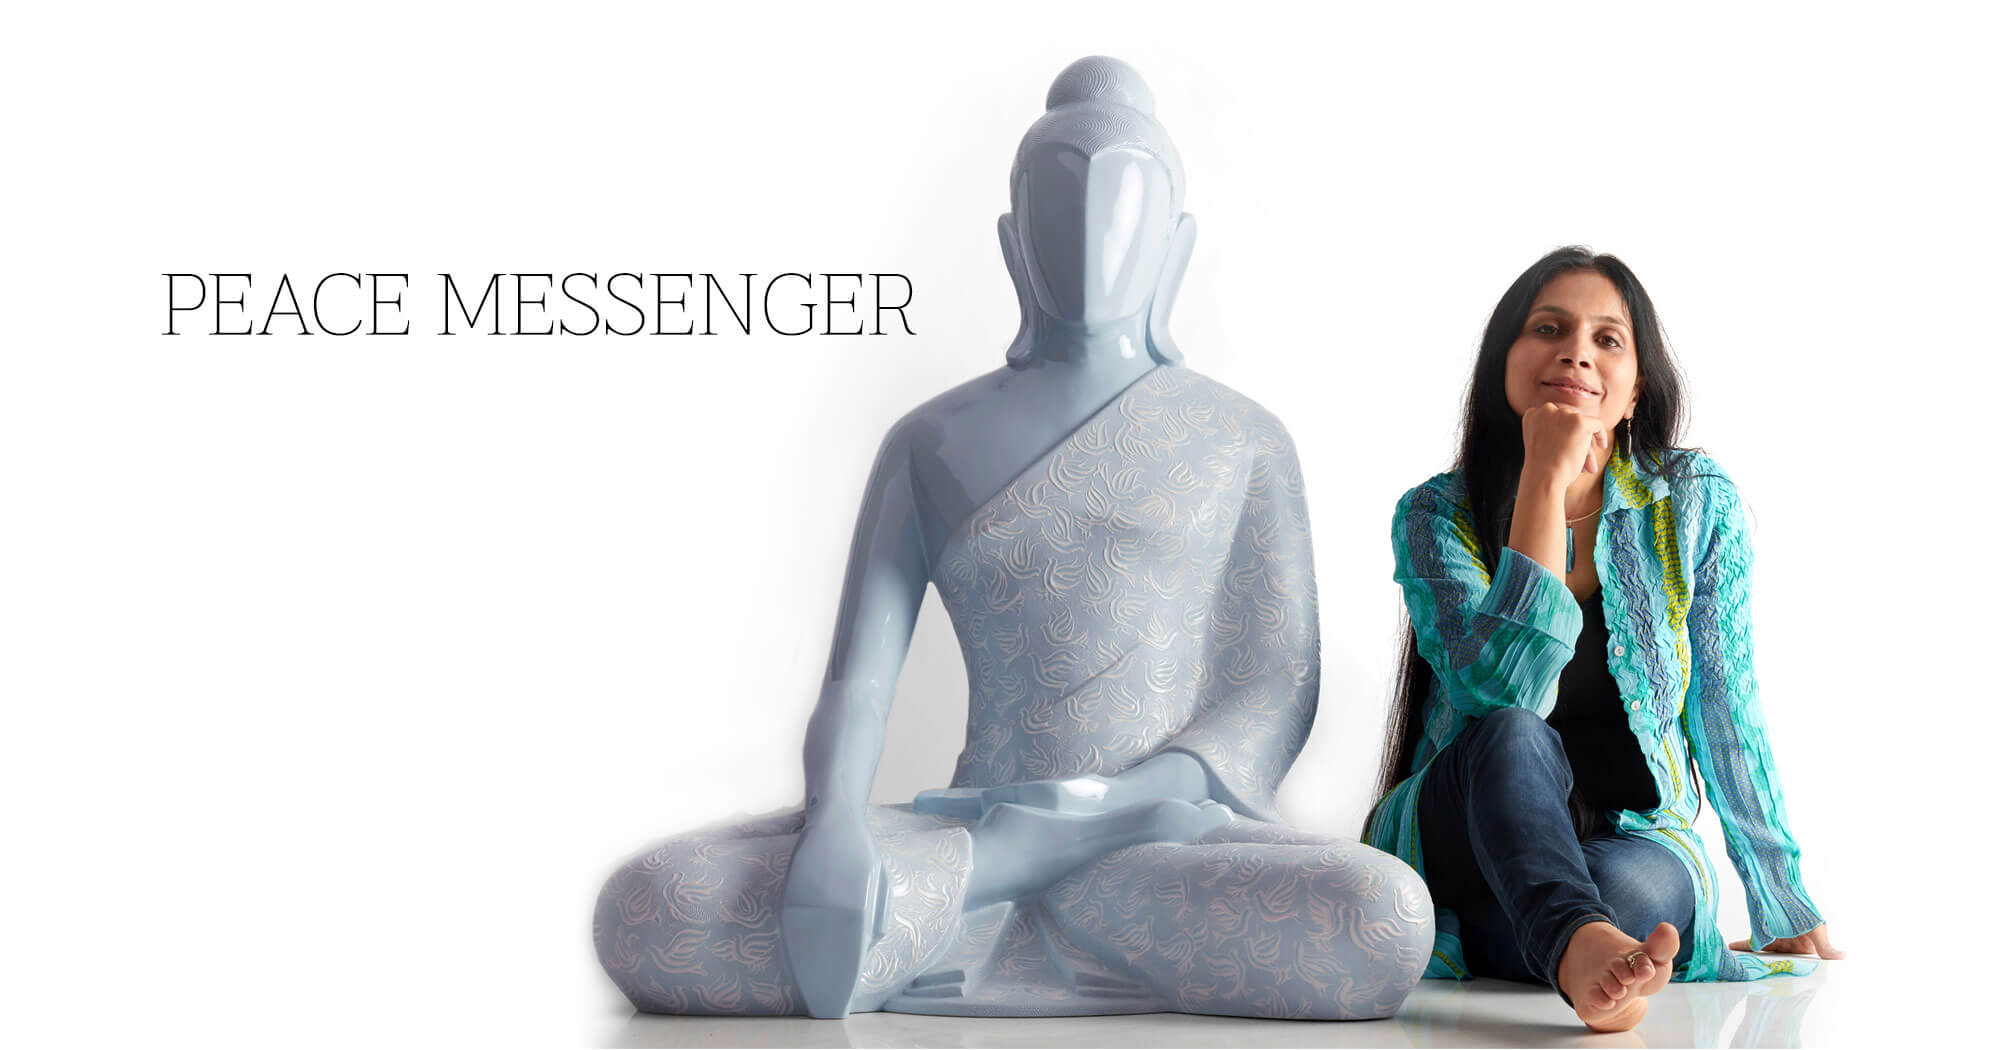 Buddha Bhoomi Peace messenger Sculpture, sculpted by Sangeeta Abhay